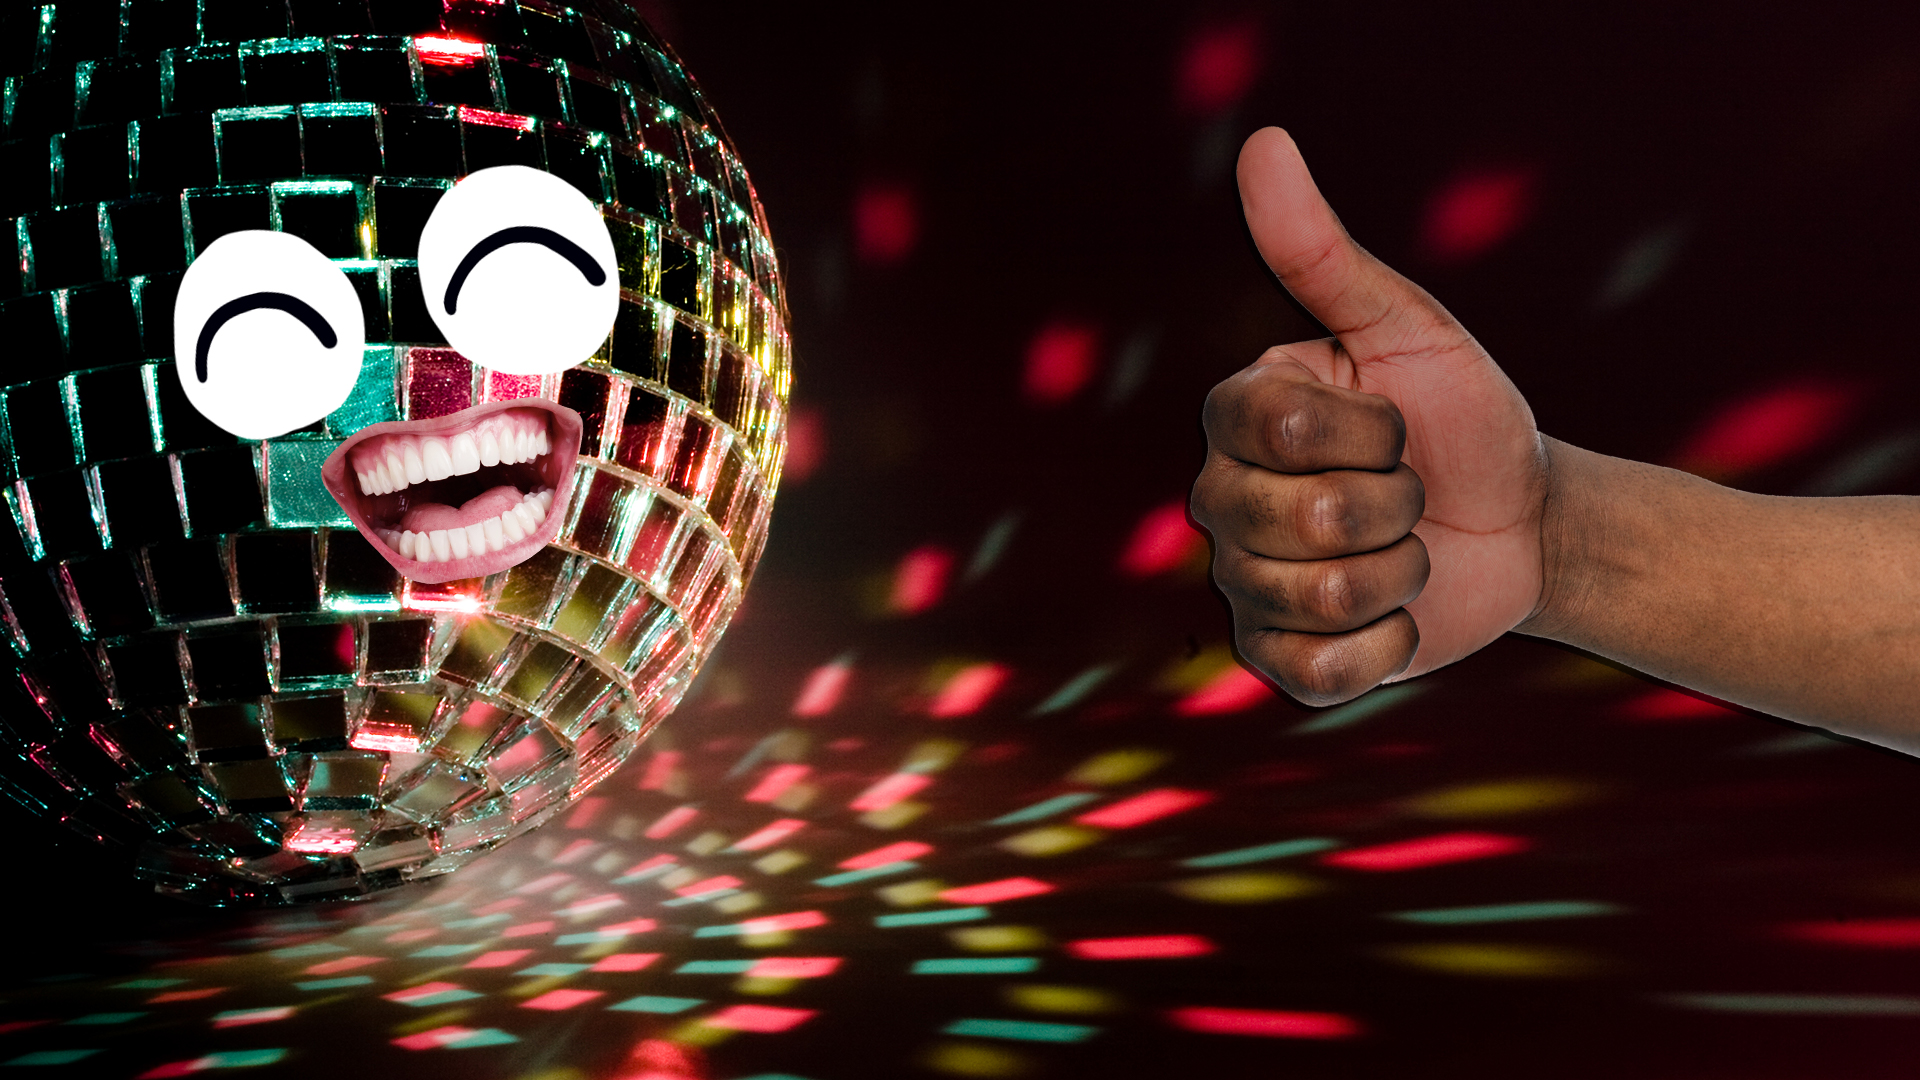 A smiling disco ball